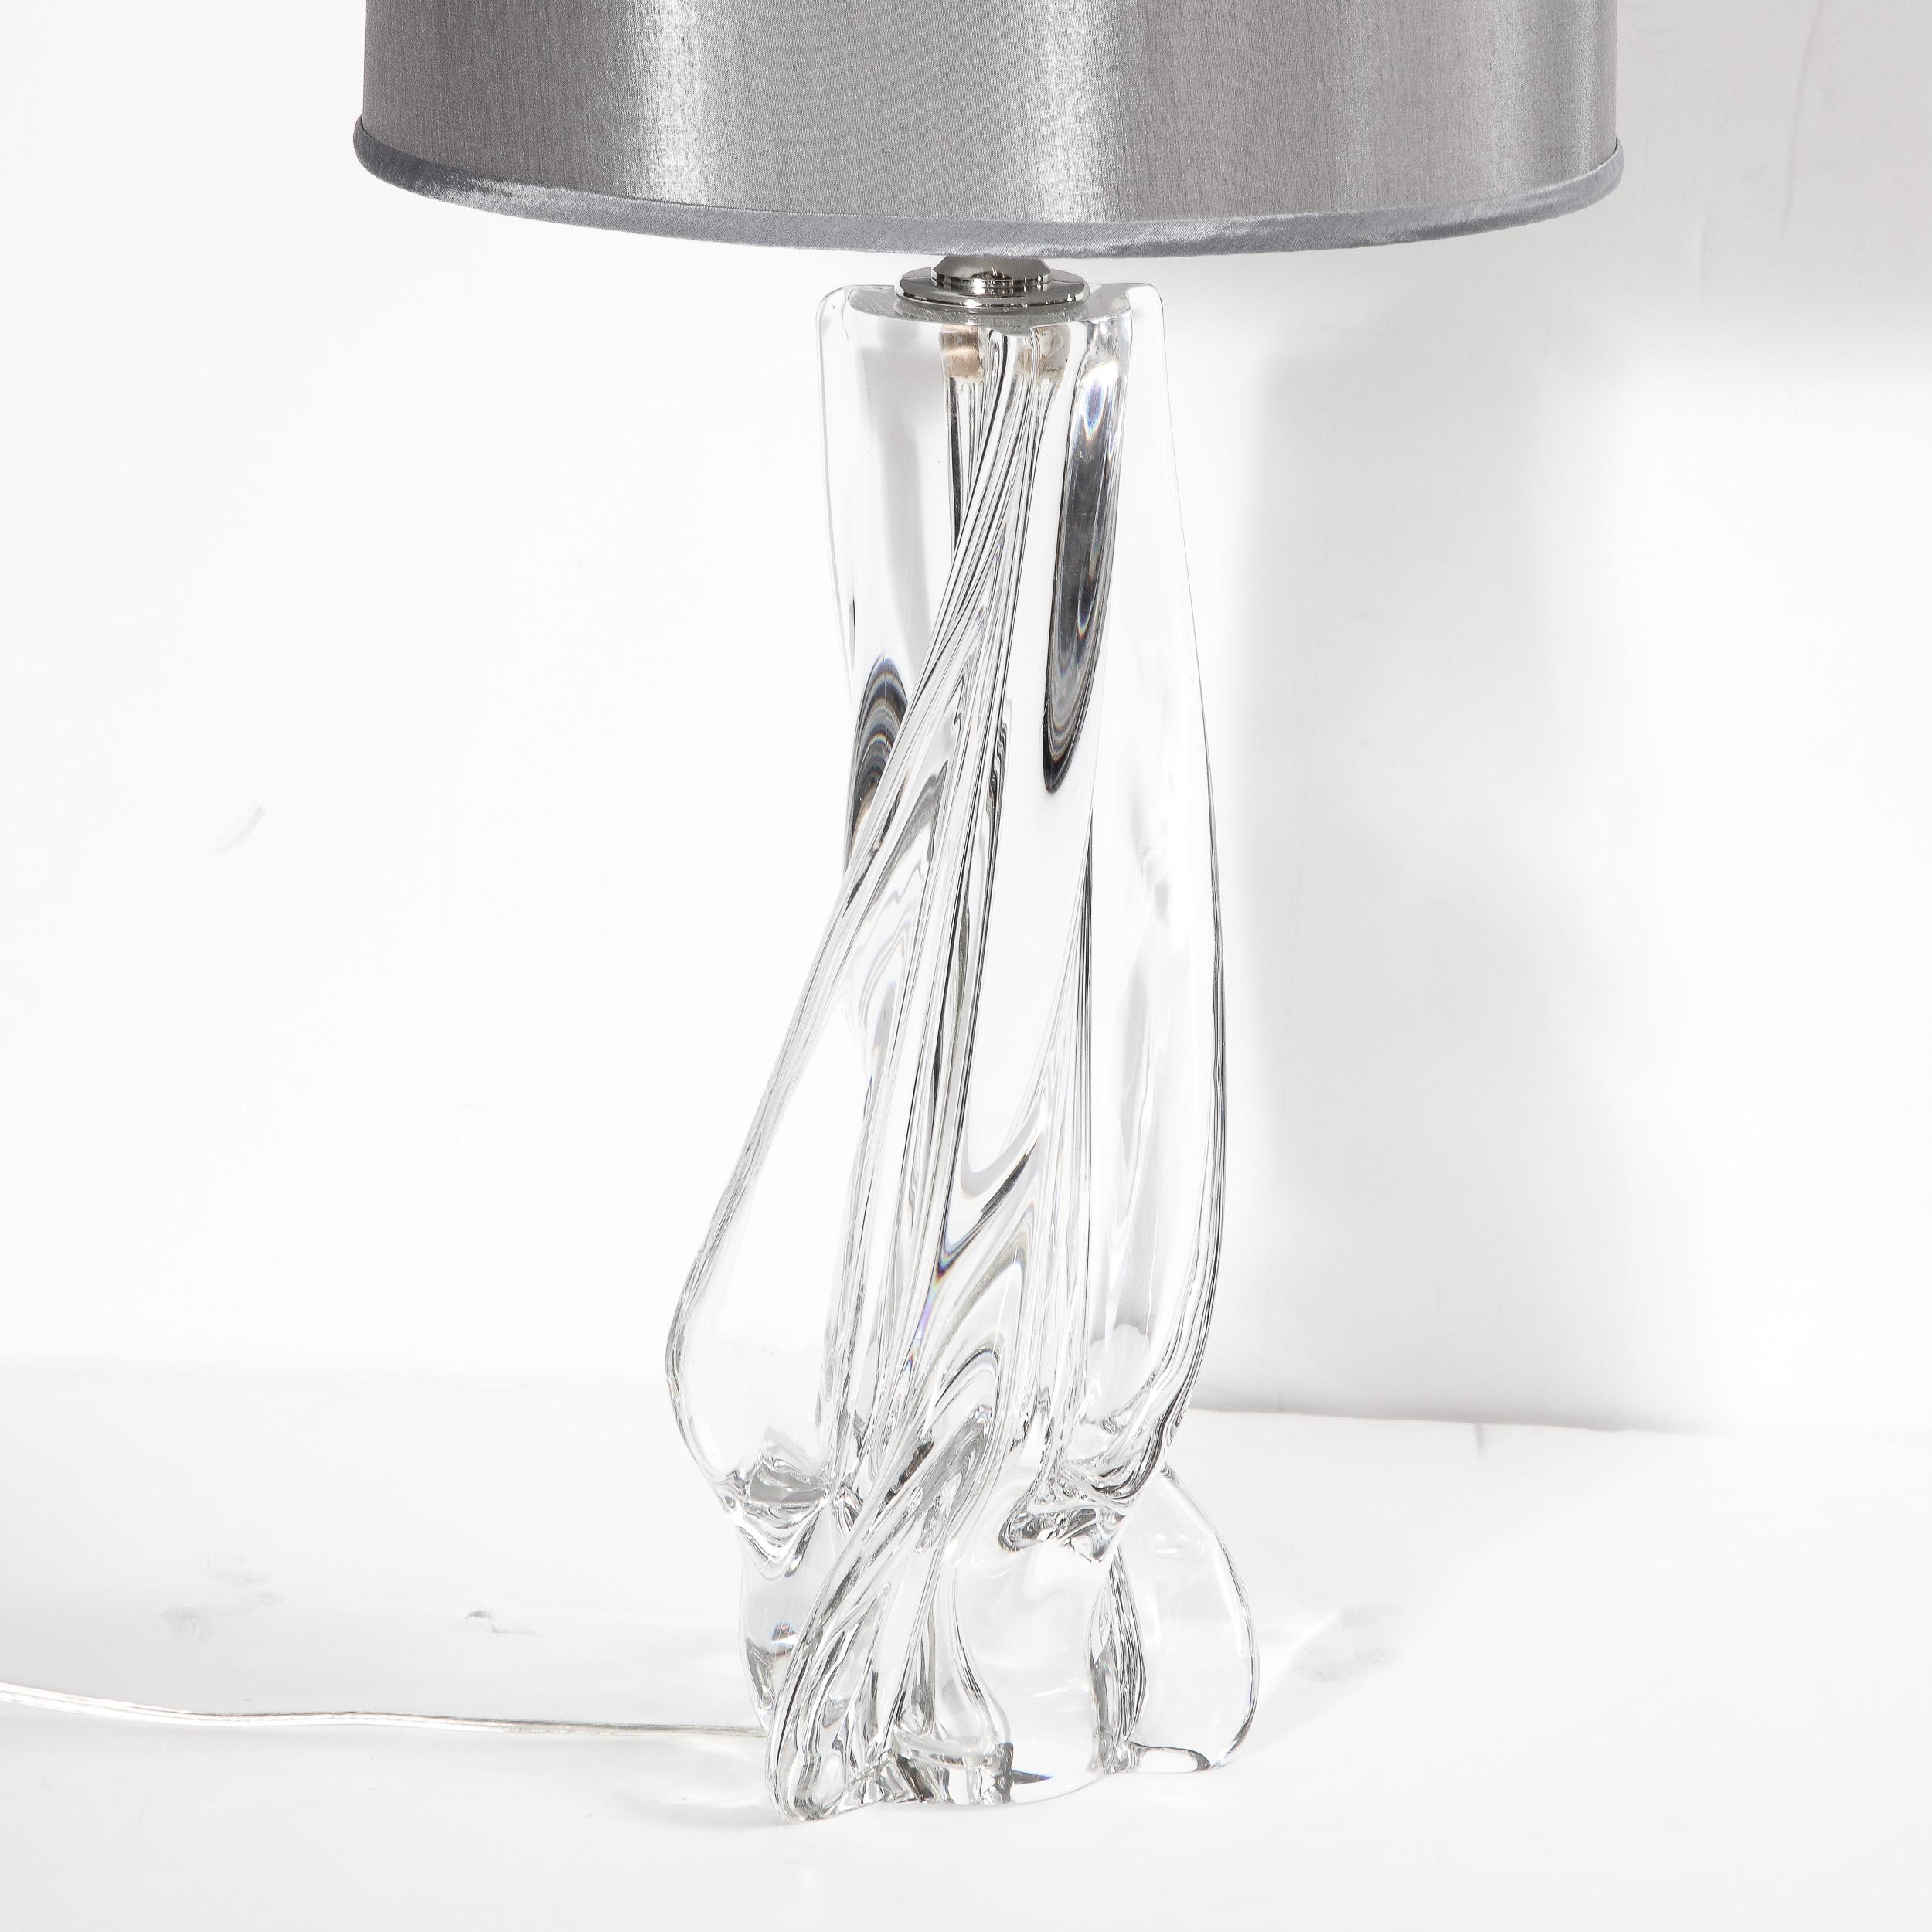 Hollywood Regency Sculptural Translucent Crystal Table Lamp Signed by Sevres For Sale 2